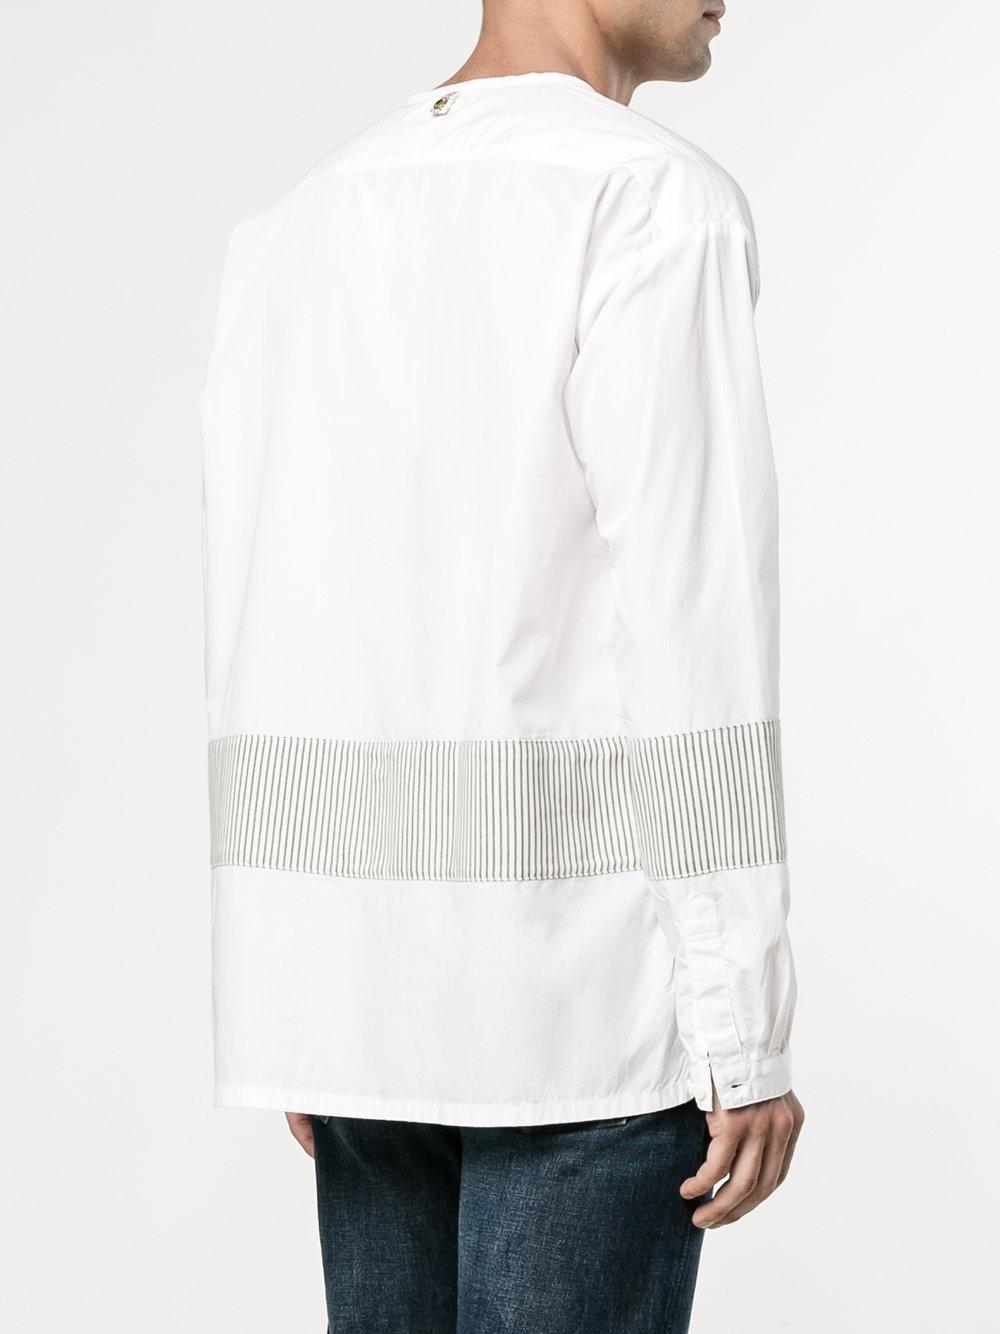 Visvim Cotton Kerchief Border Tunic in White for Men - Lyst